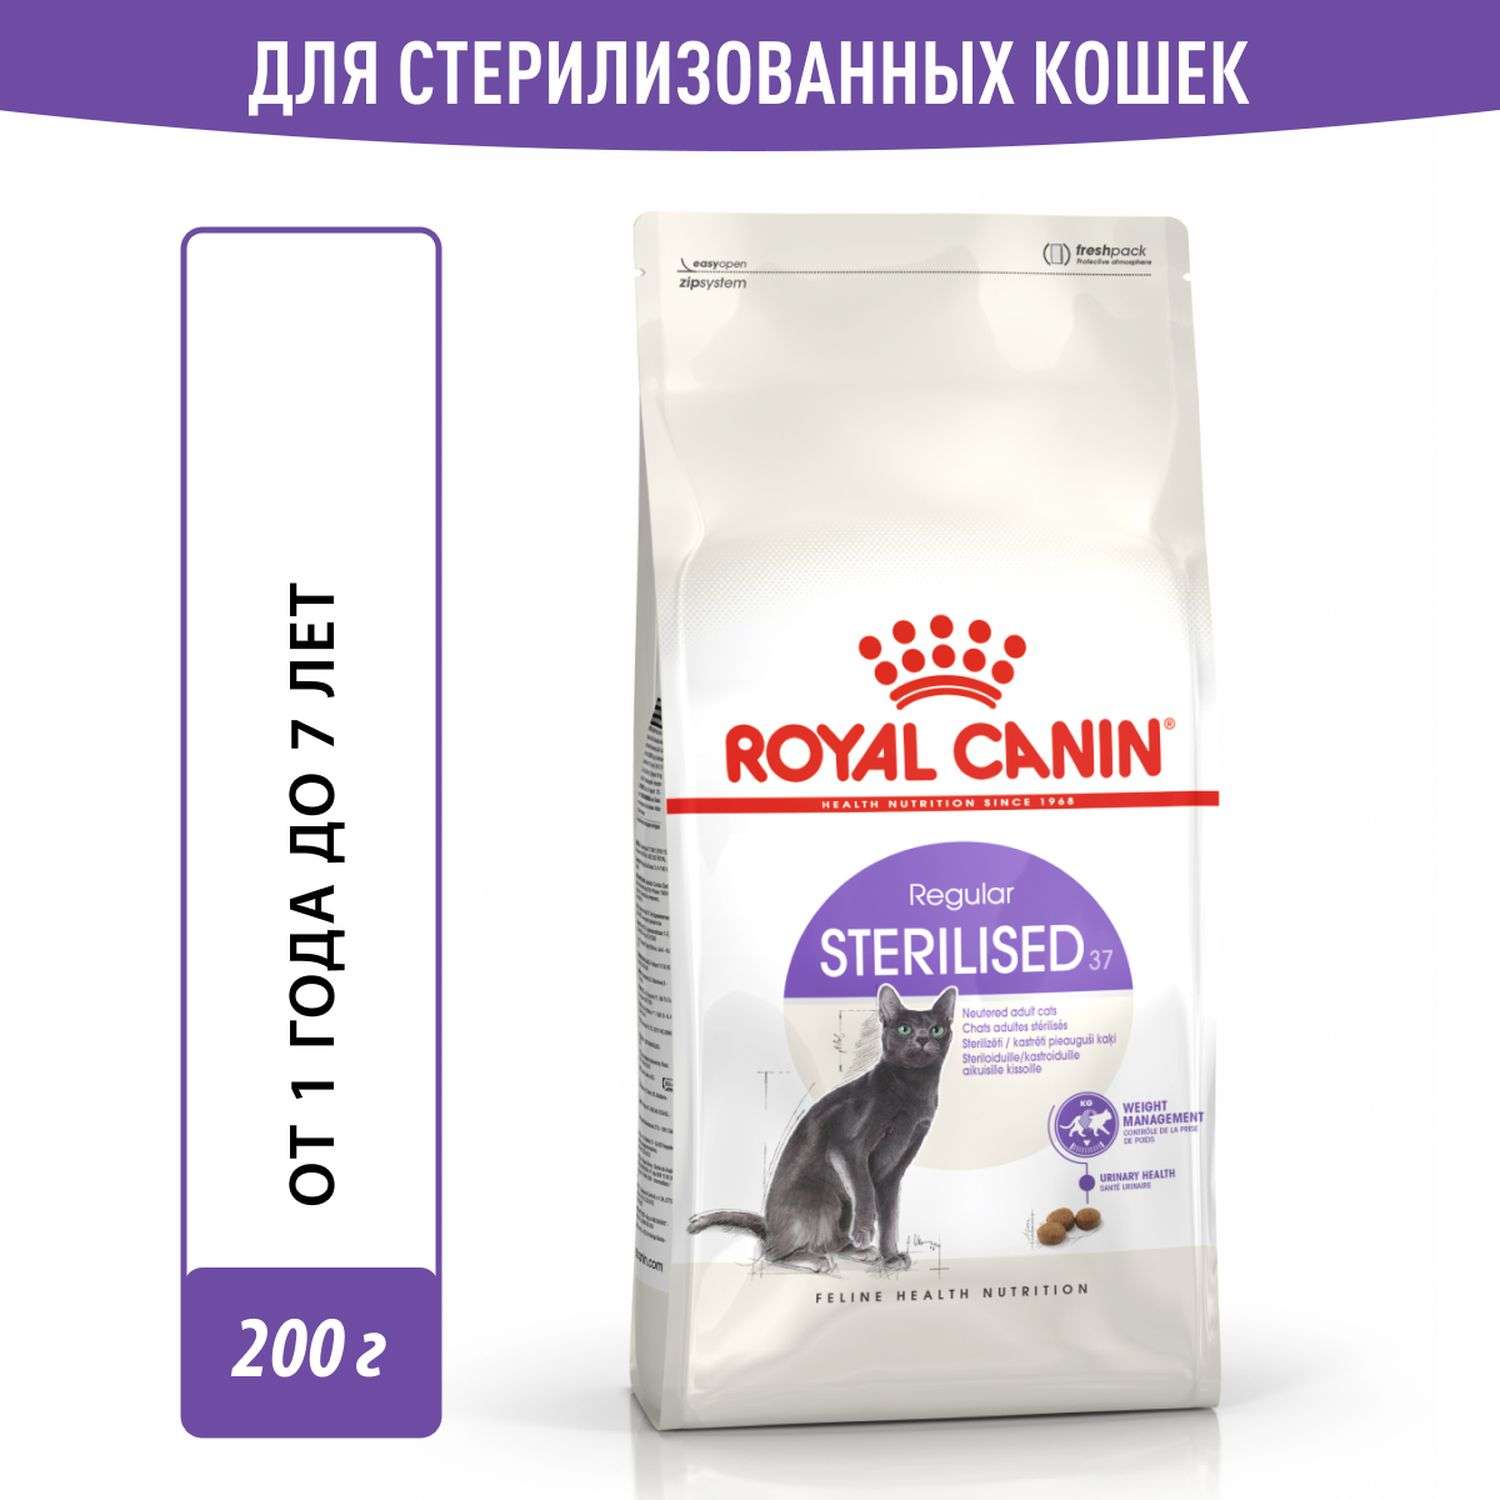 Корм ROYAL CANIN Sterilised 37 сухой 0.2кг для стерилизованных кошек - фото 1